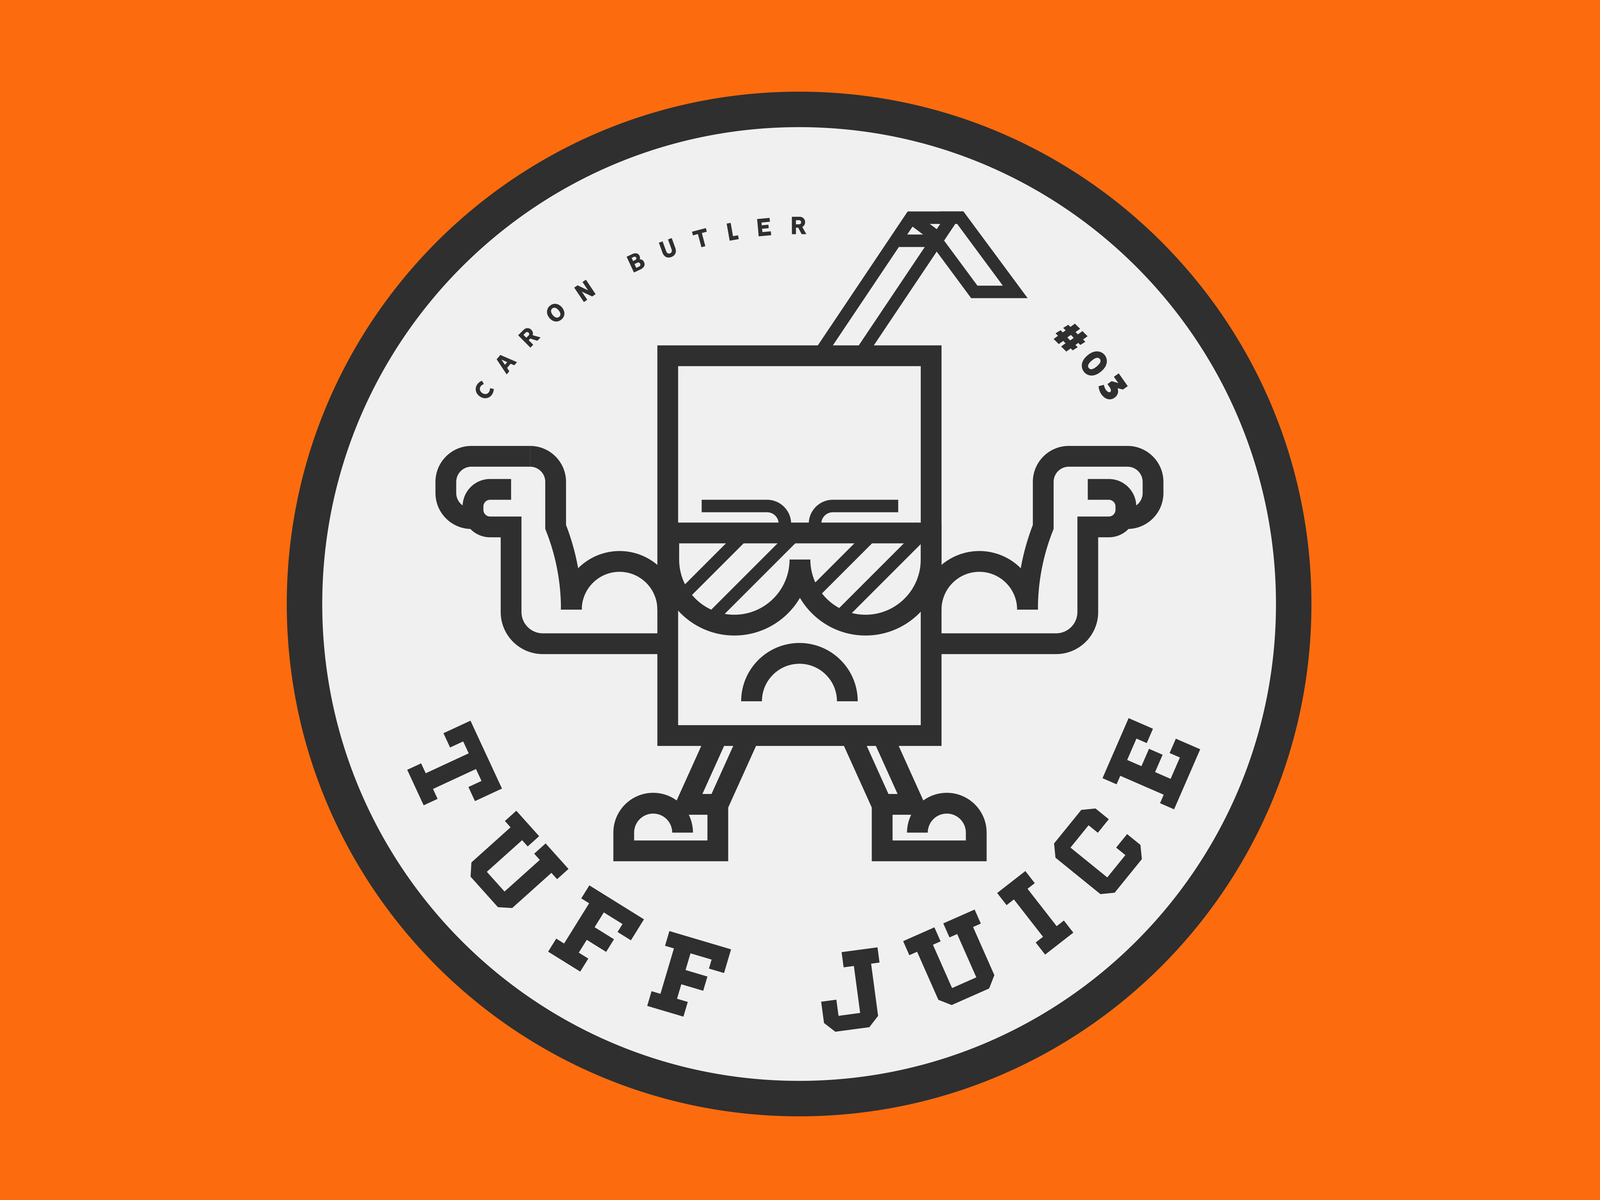 Tuff Juice nba nicknames 3 single line graphic design juice box line art nba logo sports logo nba tuff juice logo caron butler logo caron butler tough juice tuff juice